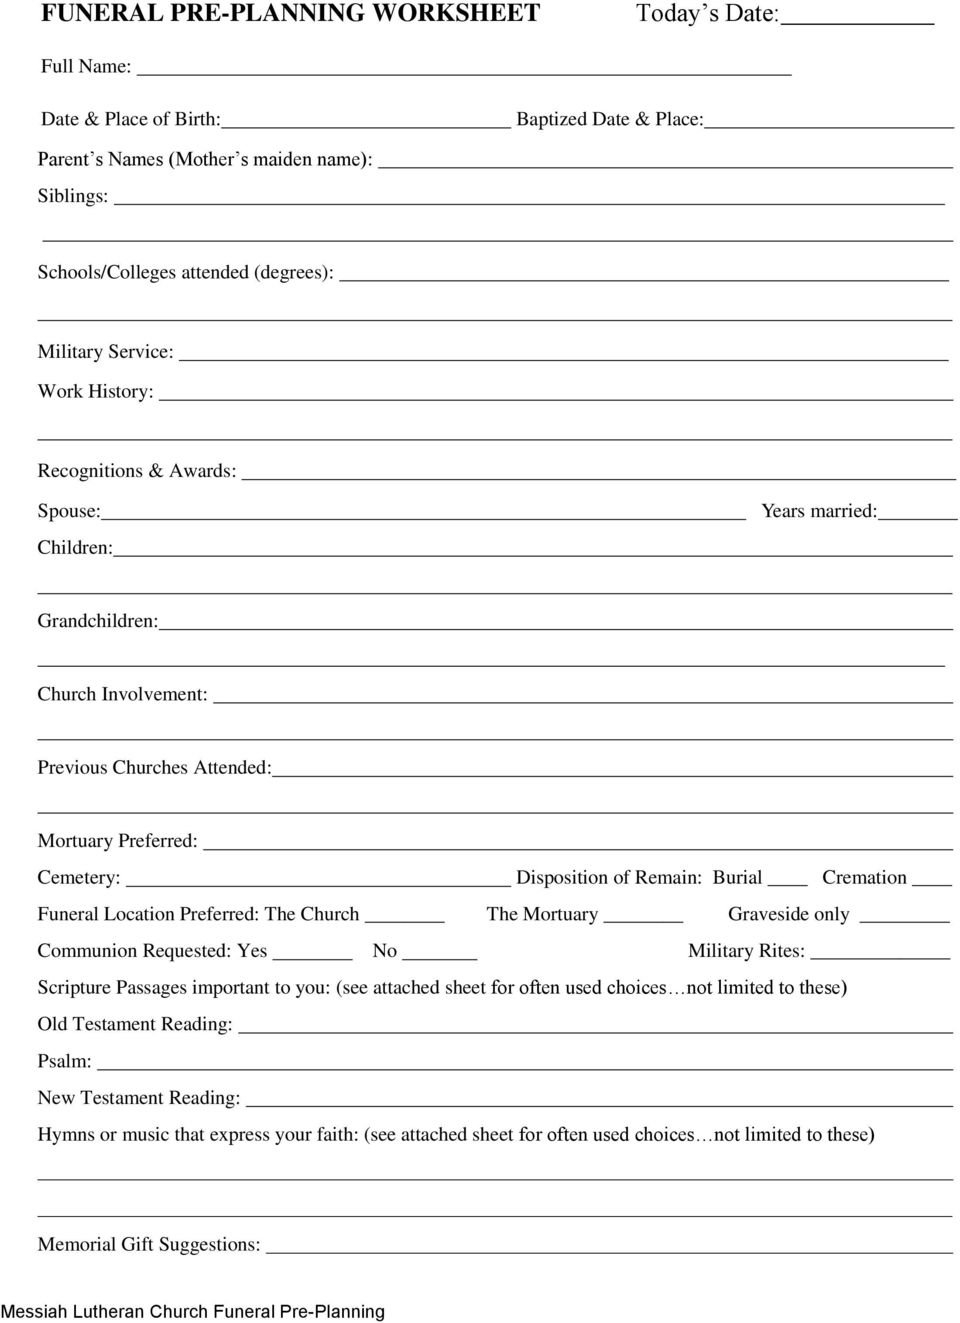 Messiah Funeral Funeral Planning Worksheet Great Solving One Step Also Funeral Pre Planning Worksheet